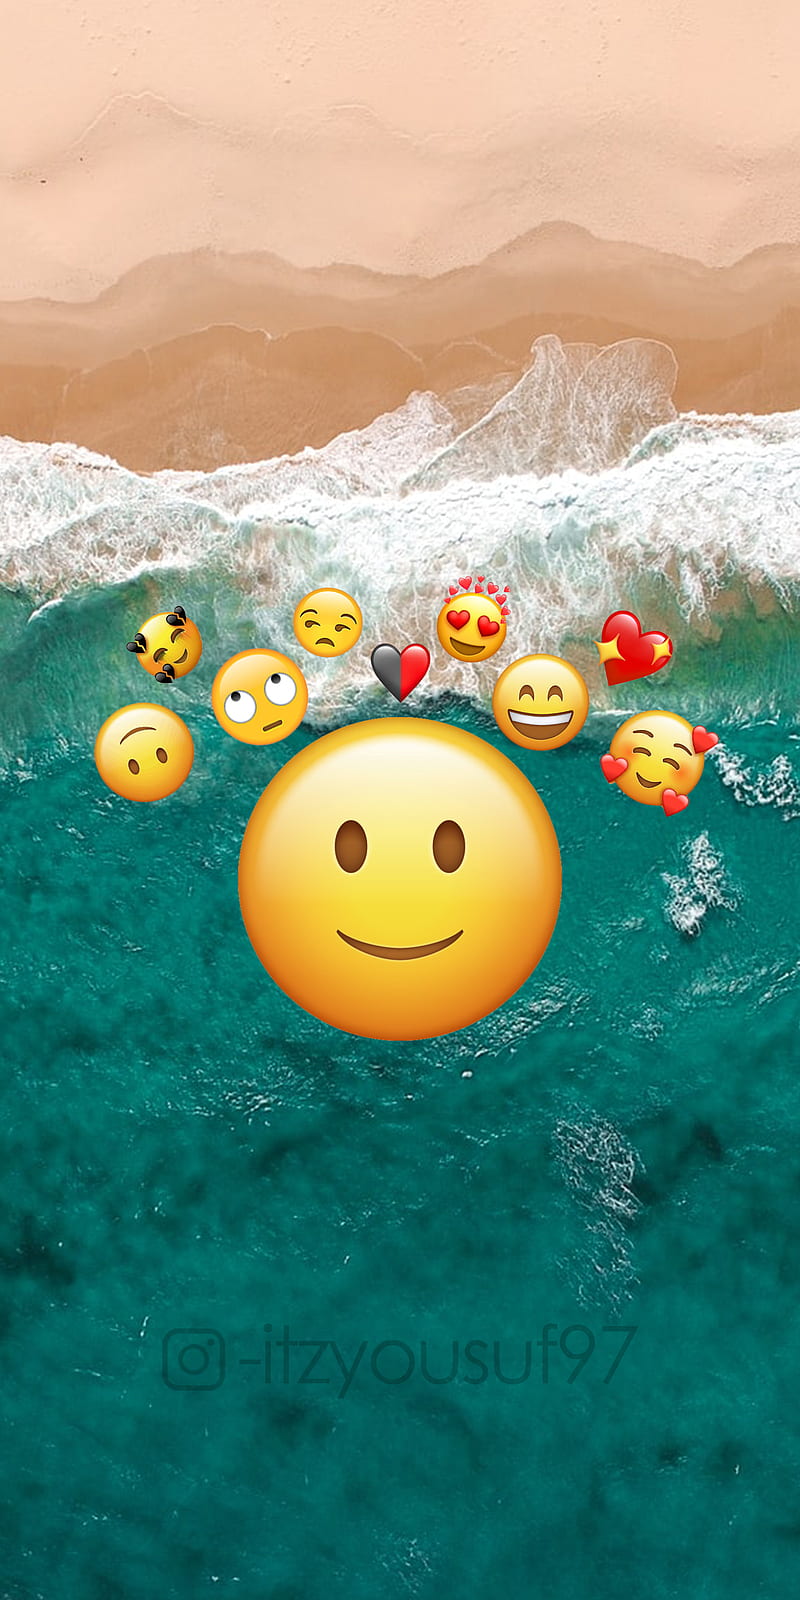 Top 999+ emoji images for whatsapp dp – Amazing Collection emoji images for whatsapp dp Full 4K